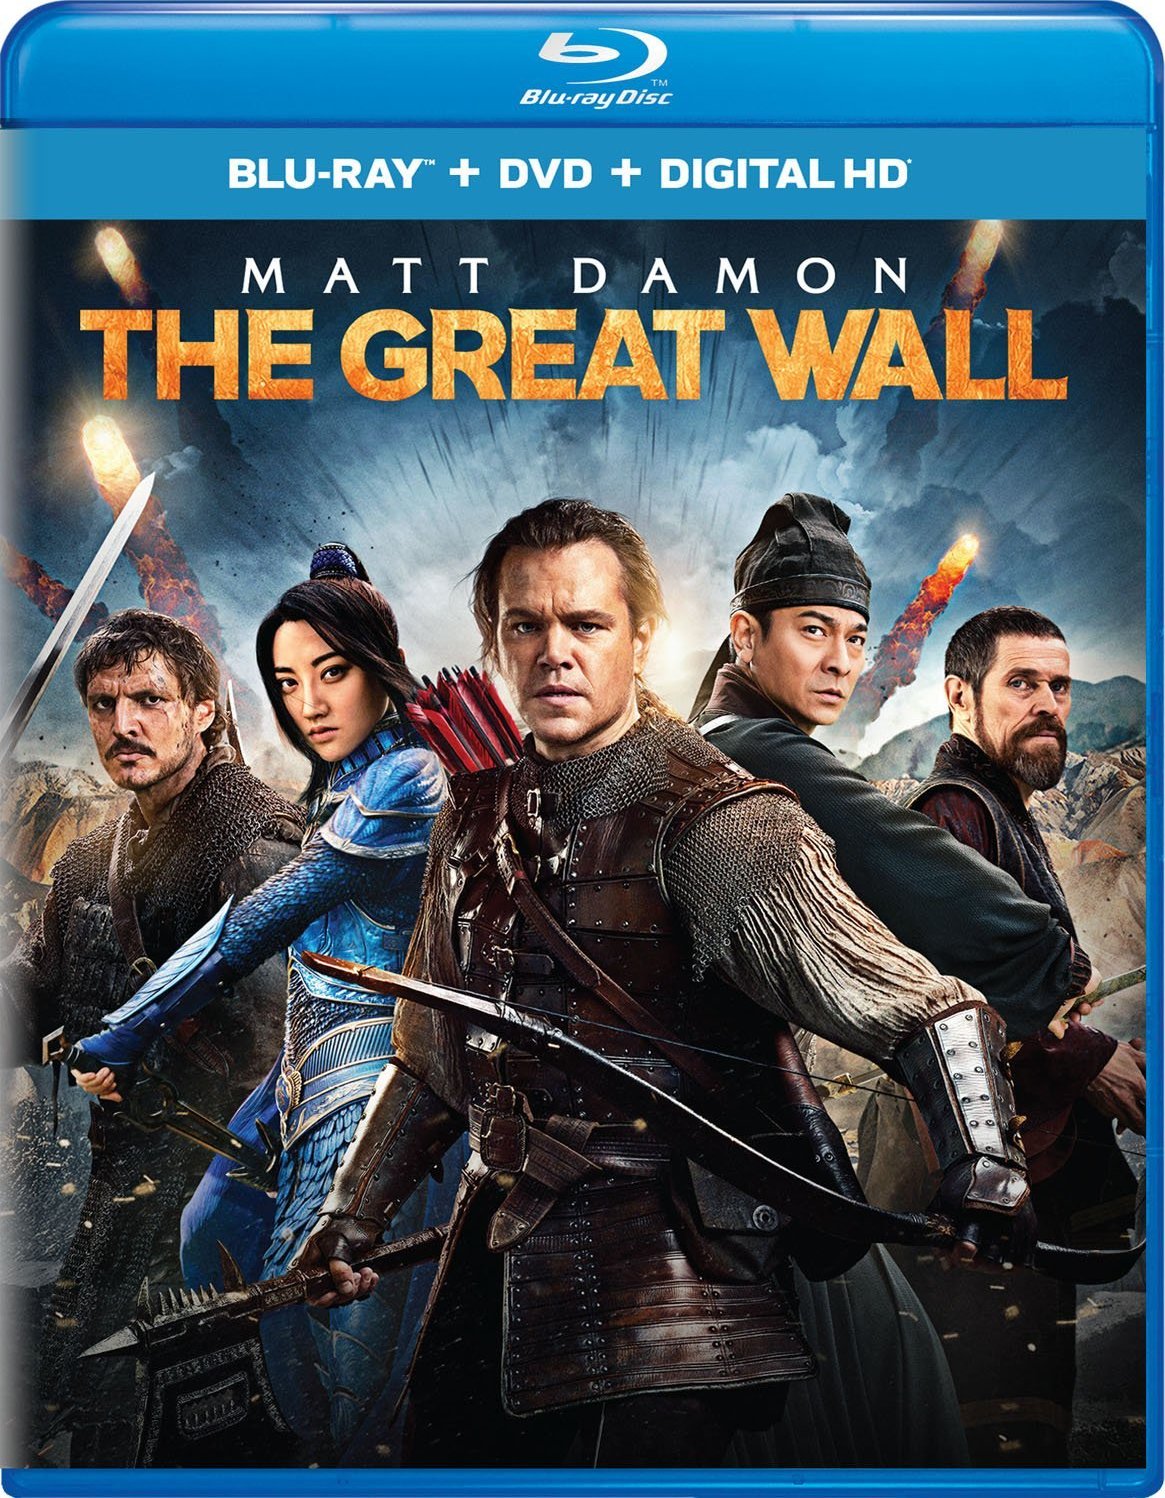 [长城].The.Great.Wall.2016.3D.BluRay.1080p.AVC.TrueHD.7.1-CHDBits   42.54G-1.jpg